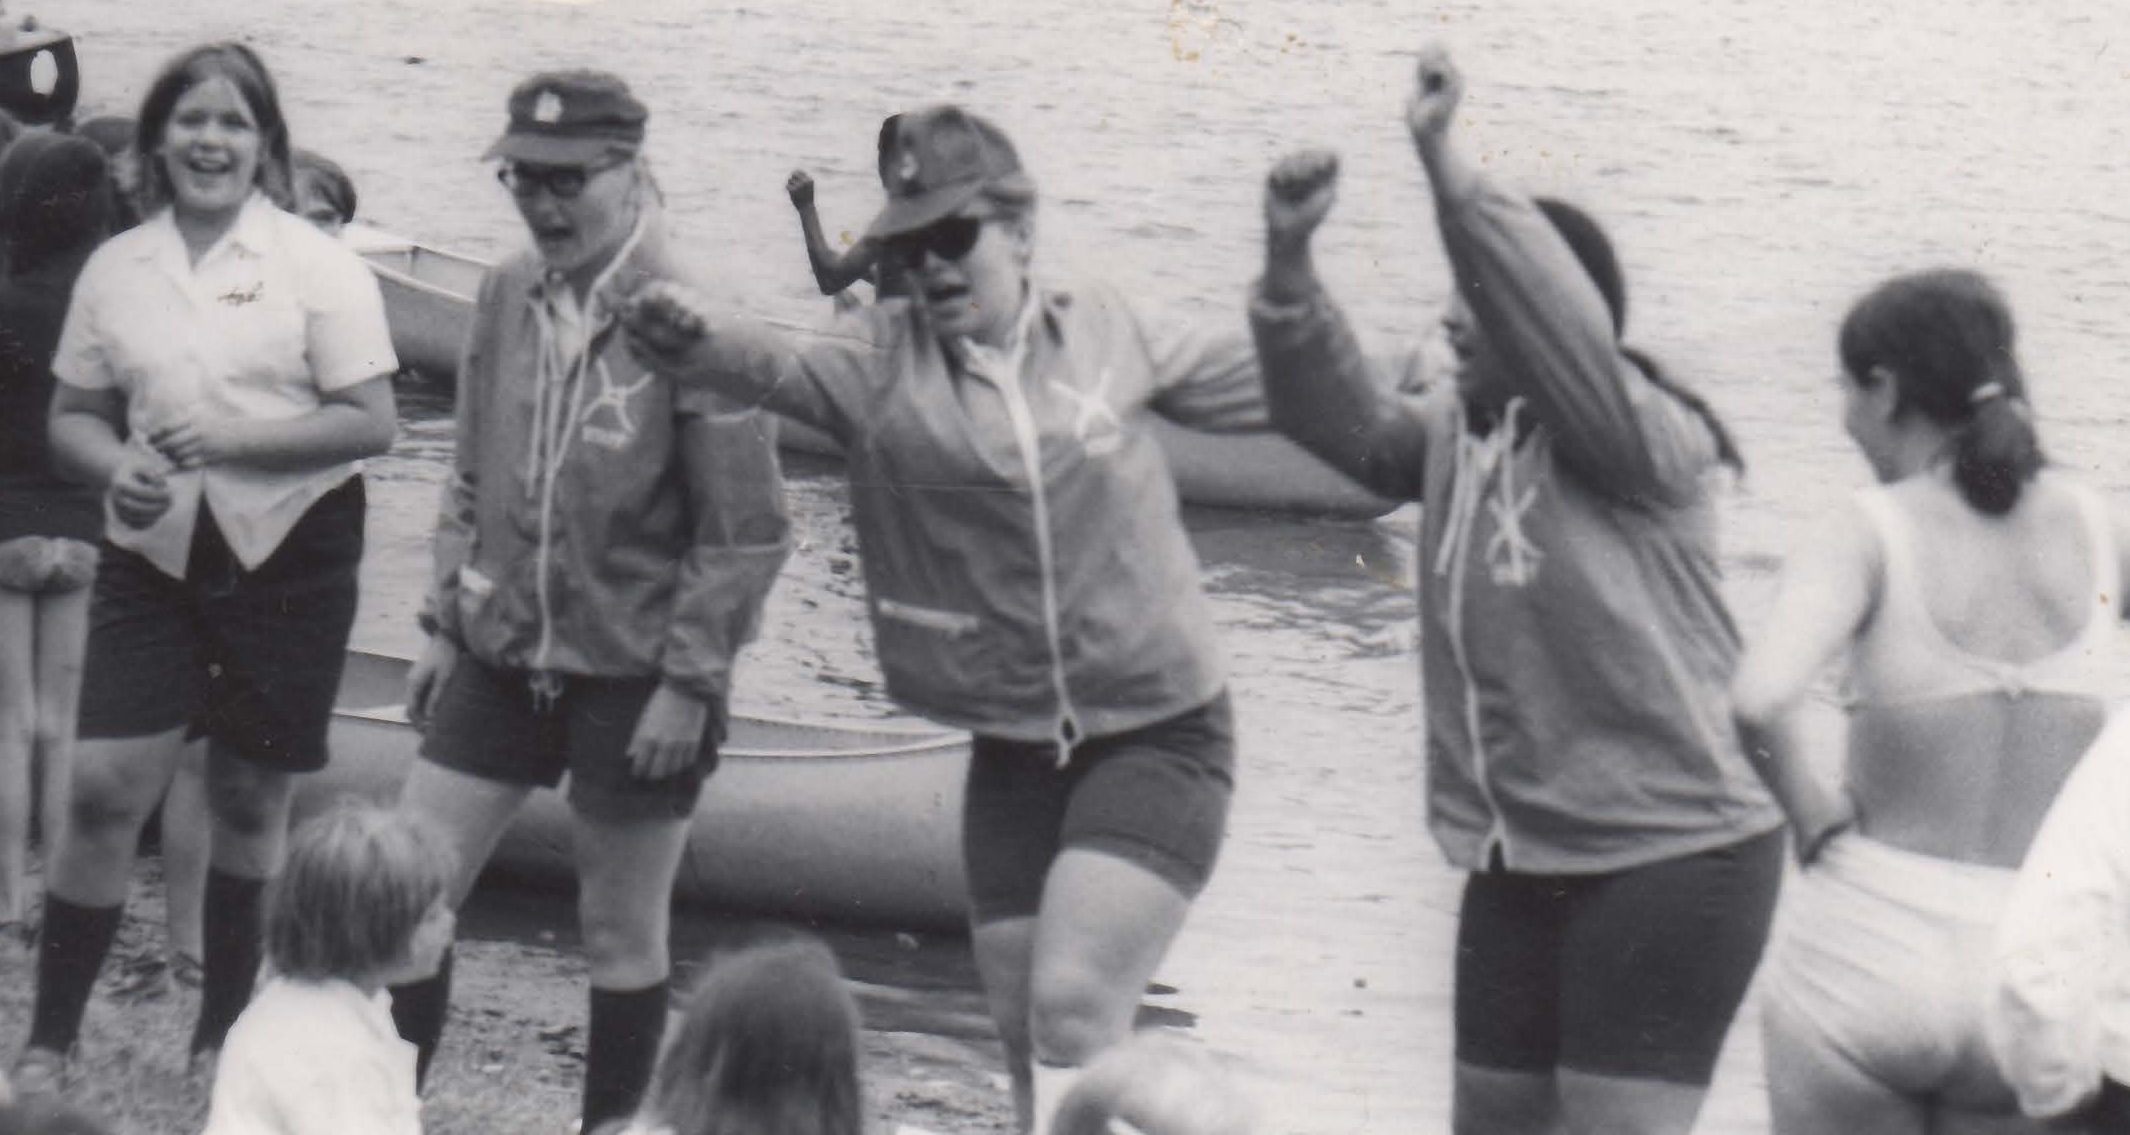 Karen as an enthusiastic canoe instructor